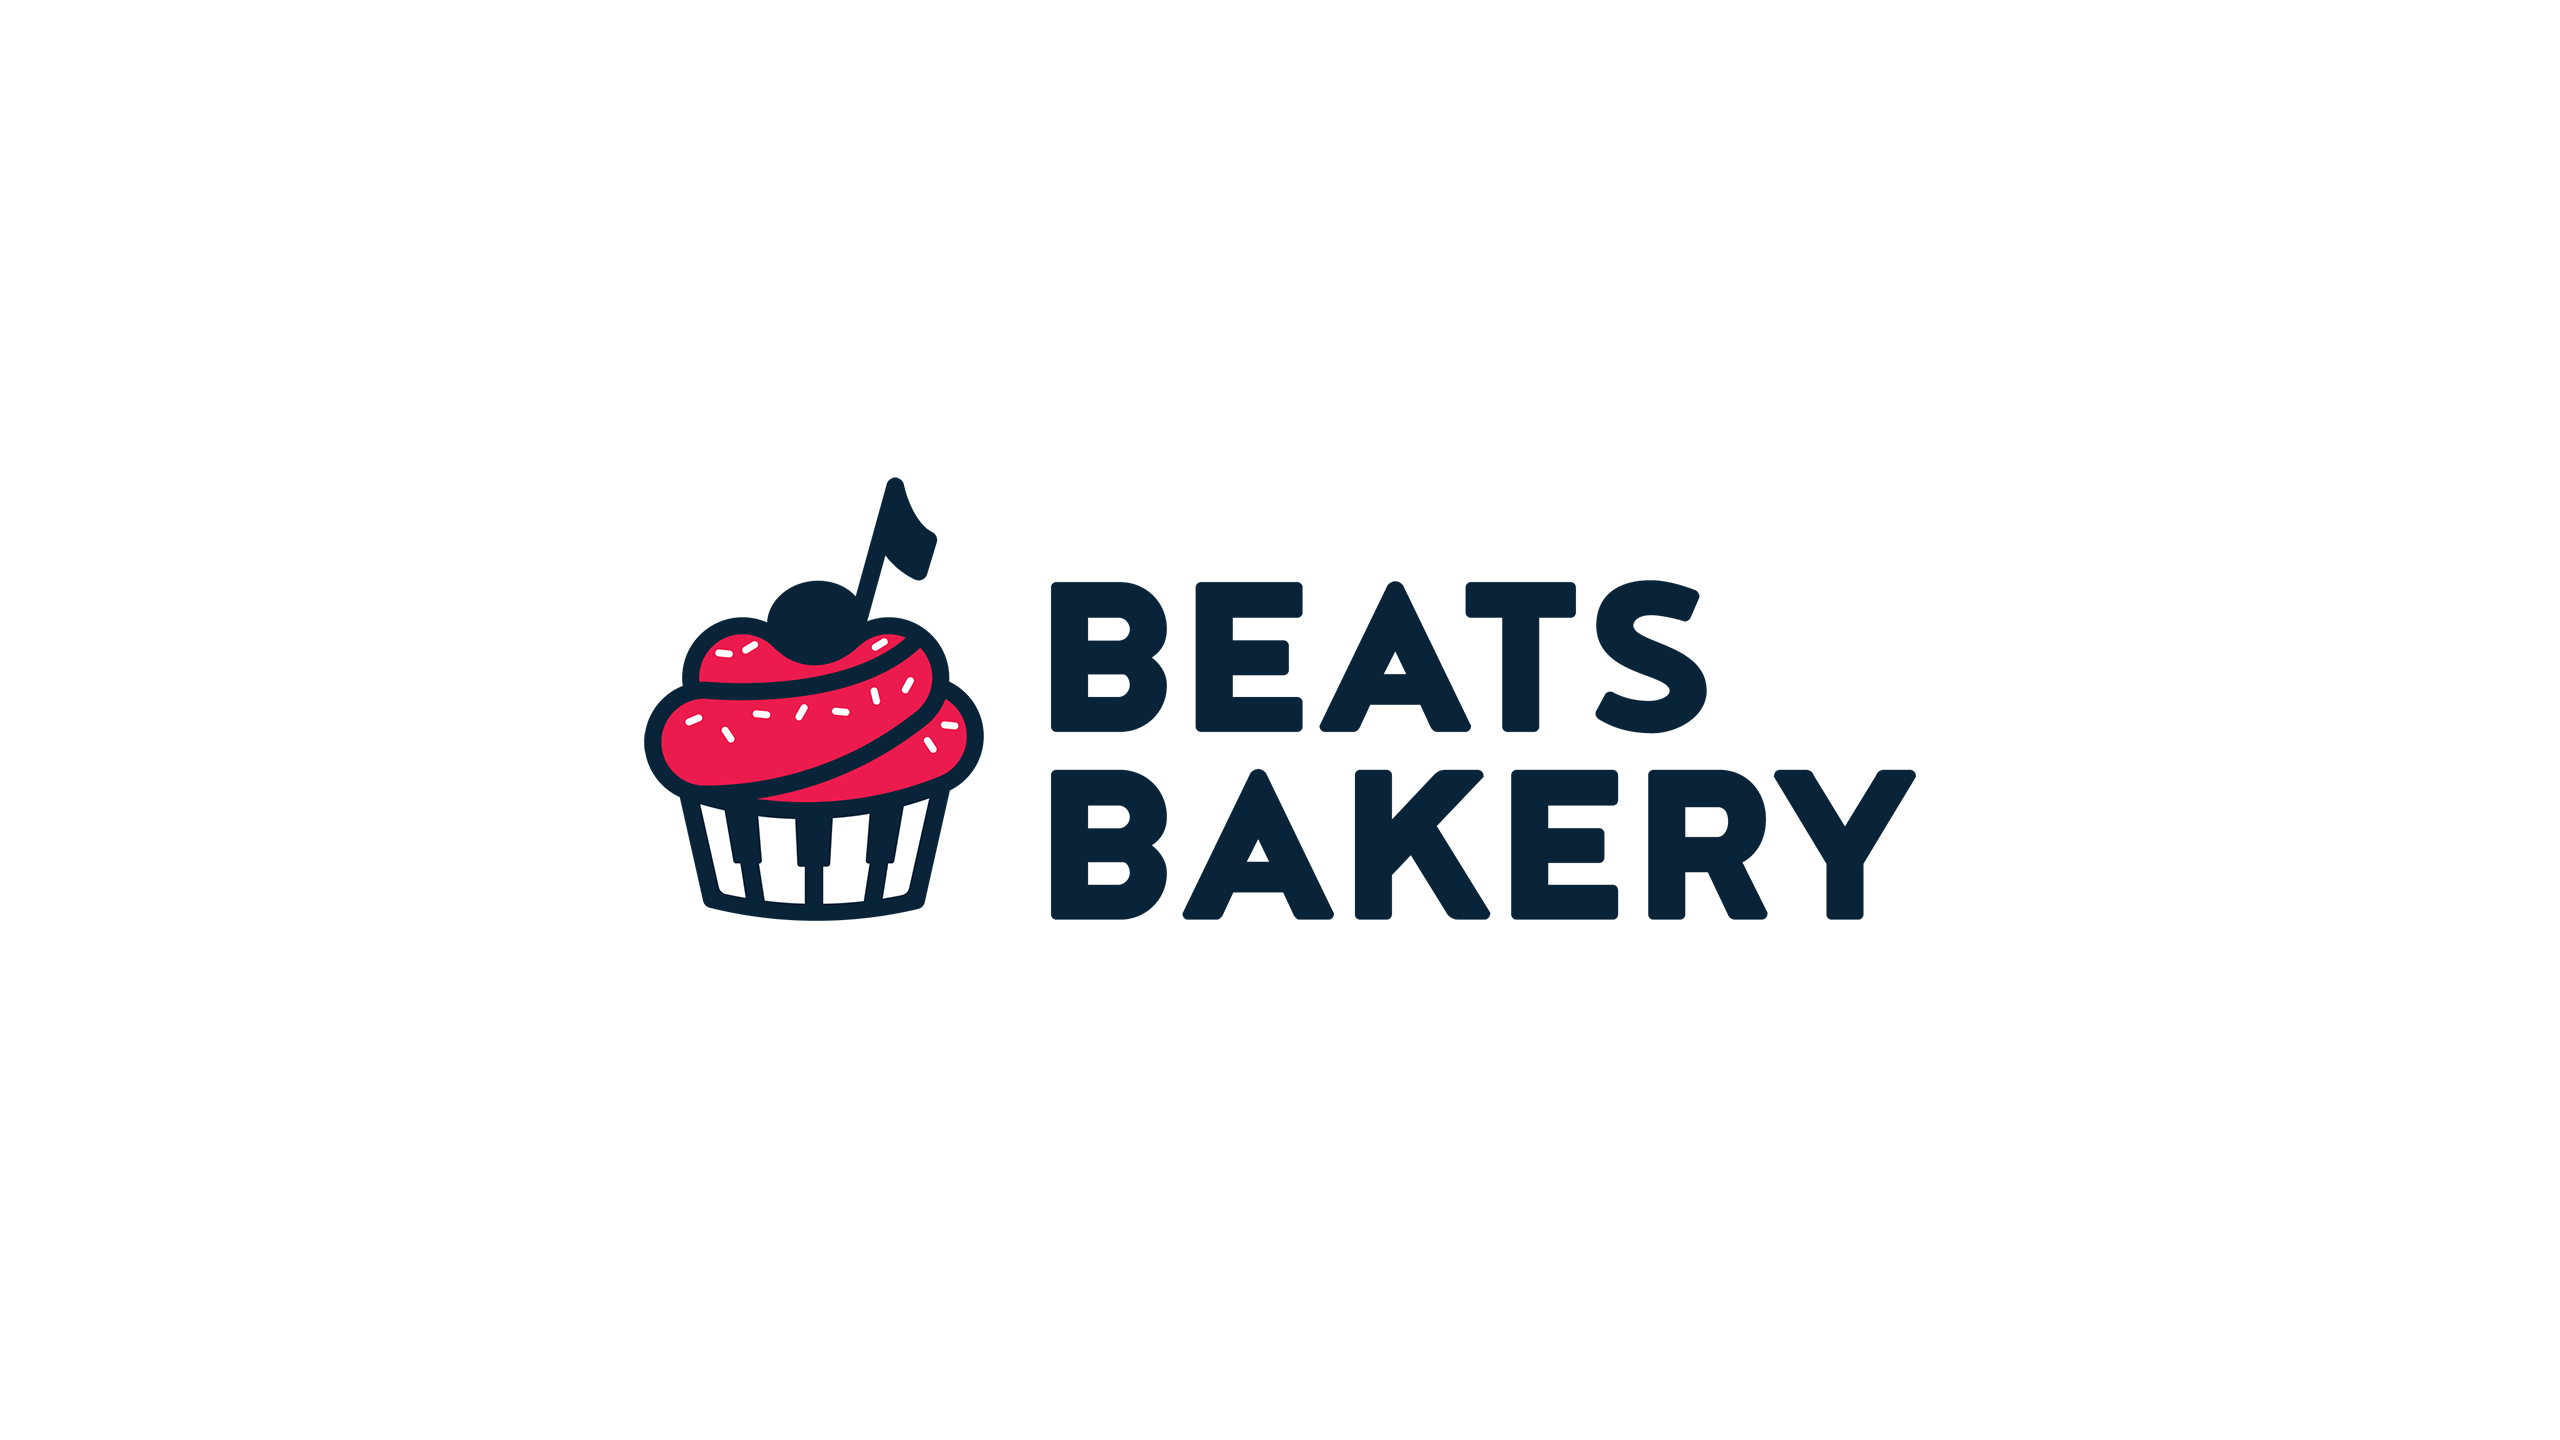 Beat bakery logo